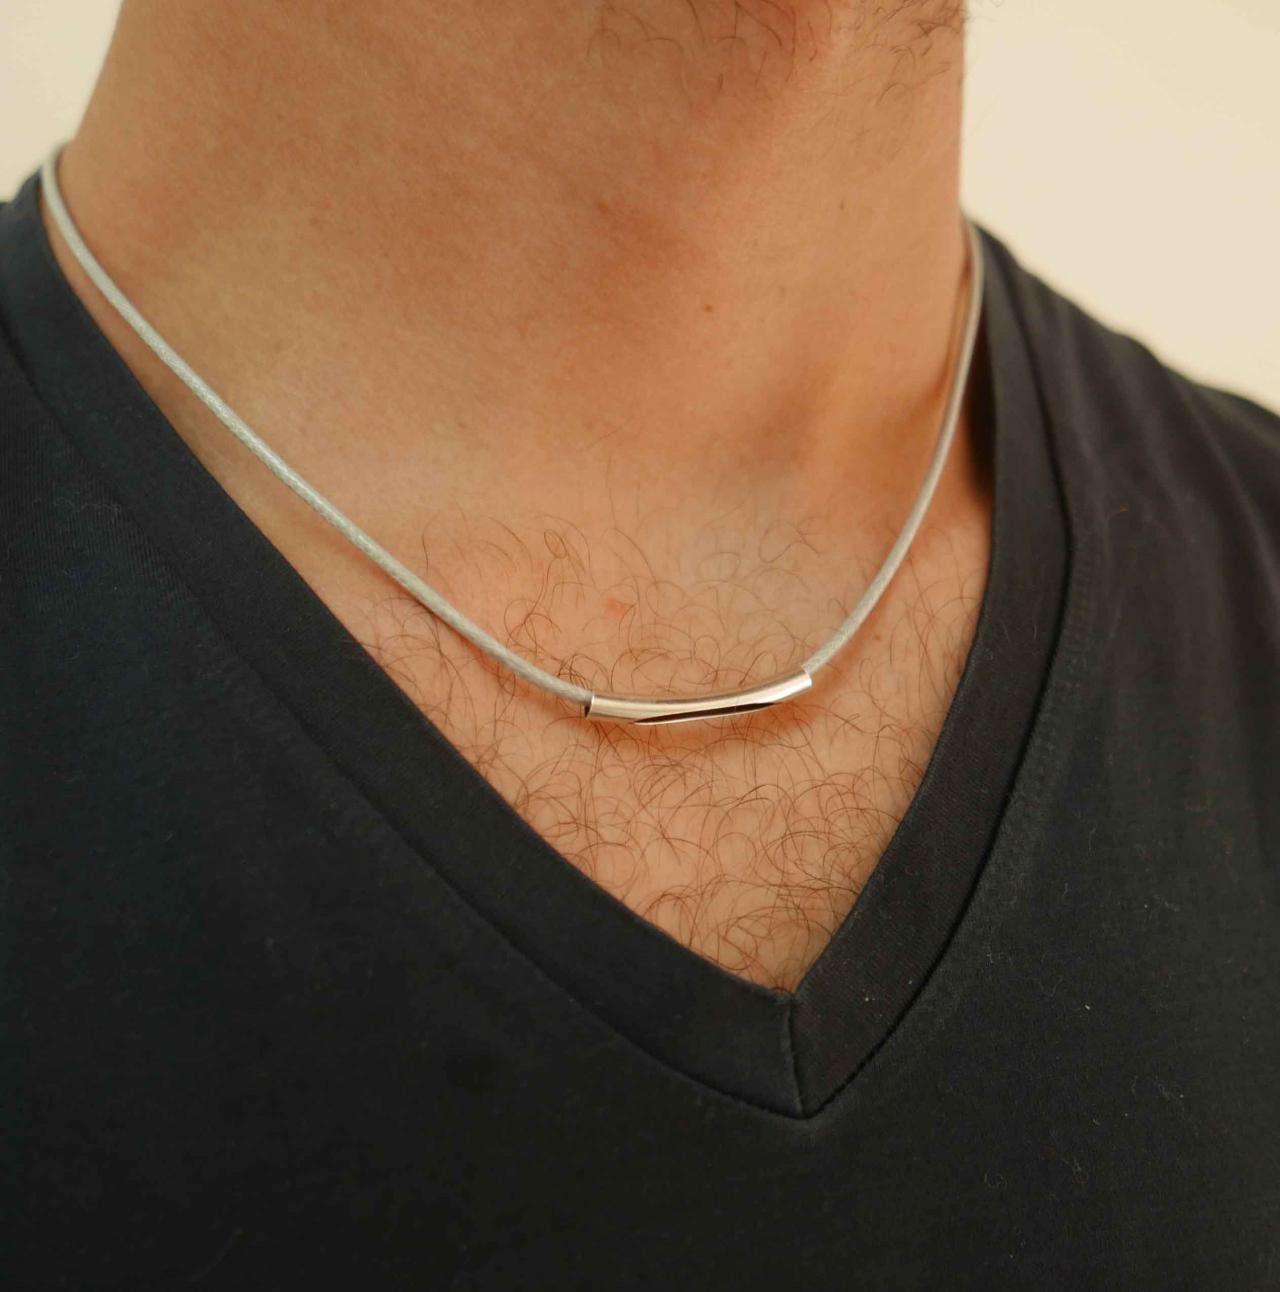 Men's Necklace - Men's Silver Necklace - Men's Vegan Necklace - Men's Jewelry - Men's Gift -